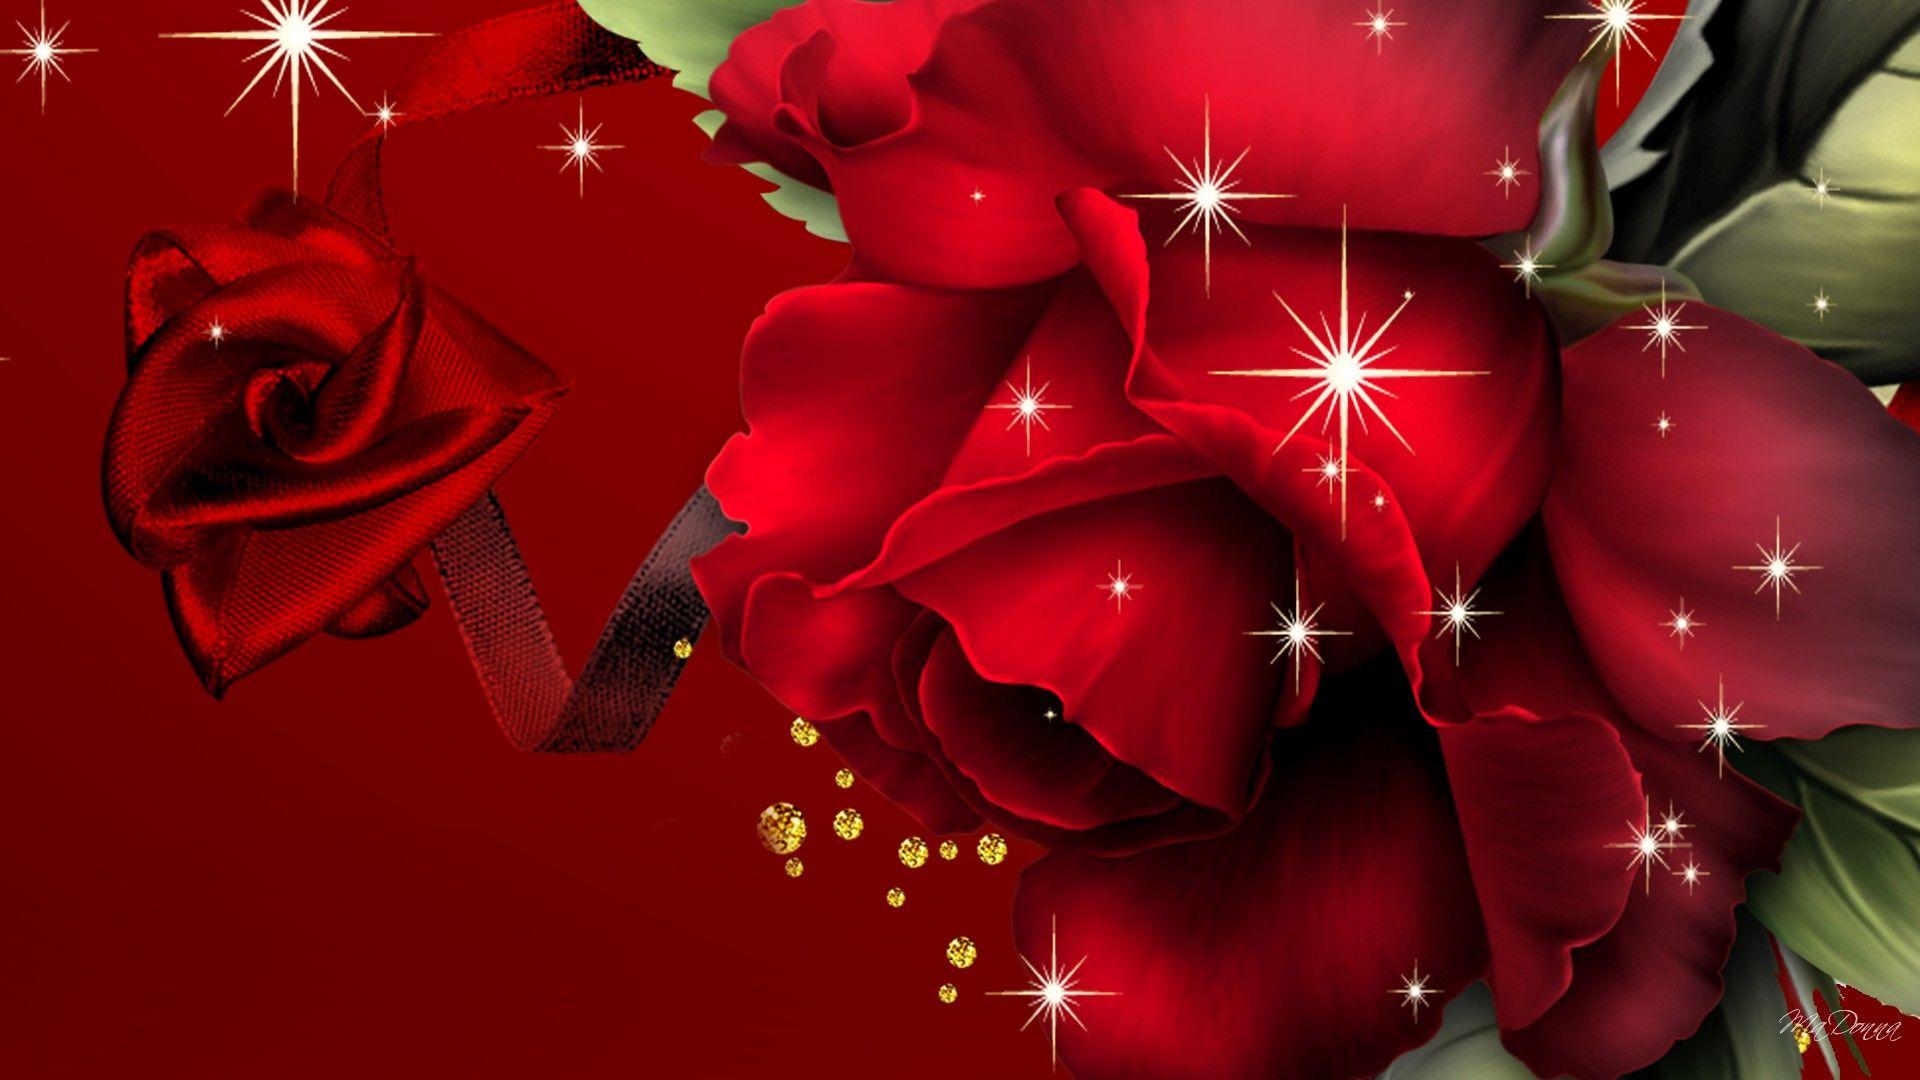 Big Red Roses Free Wallpaper Hd